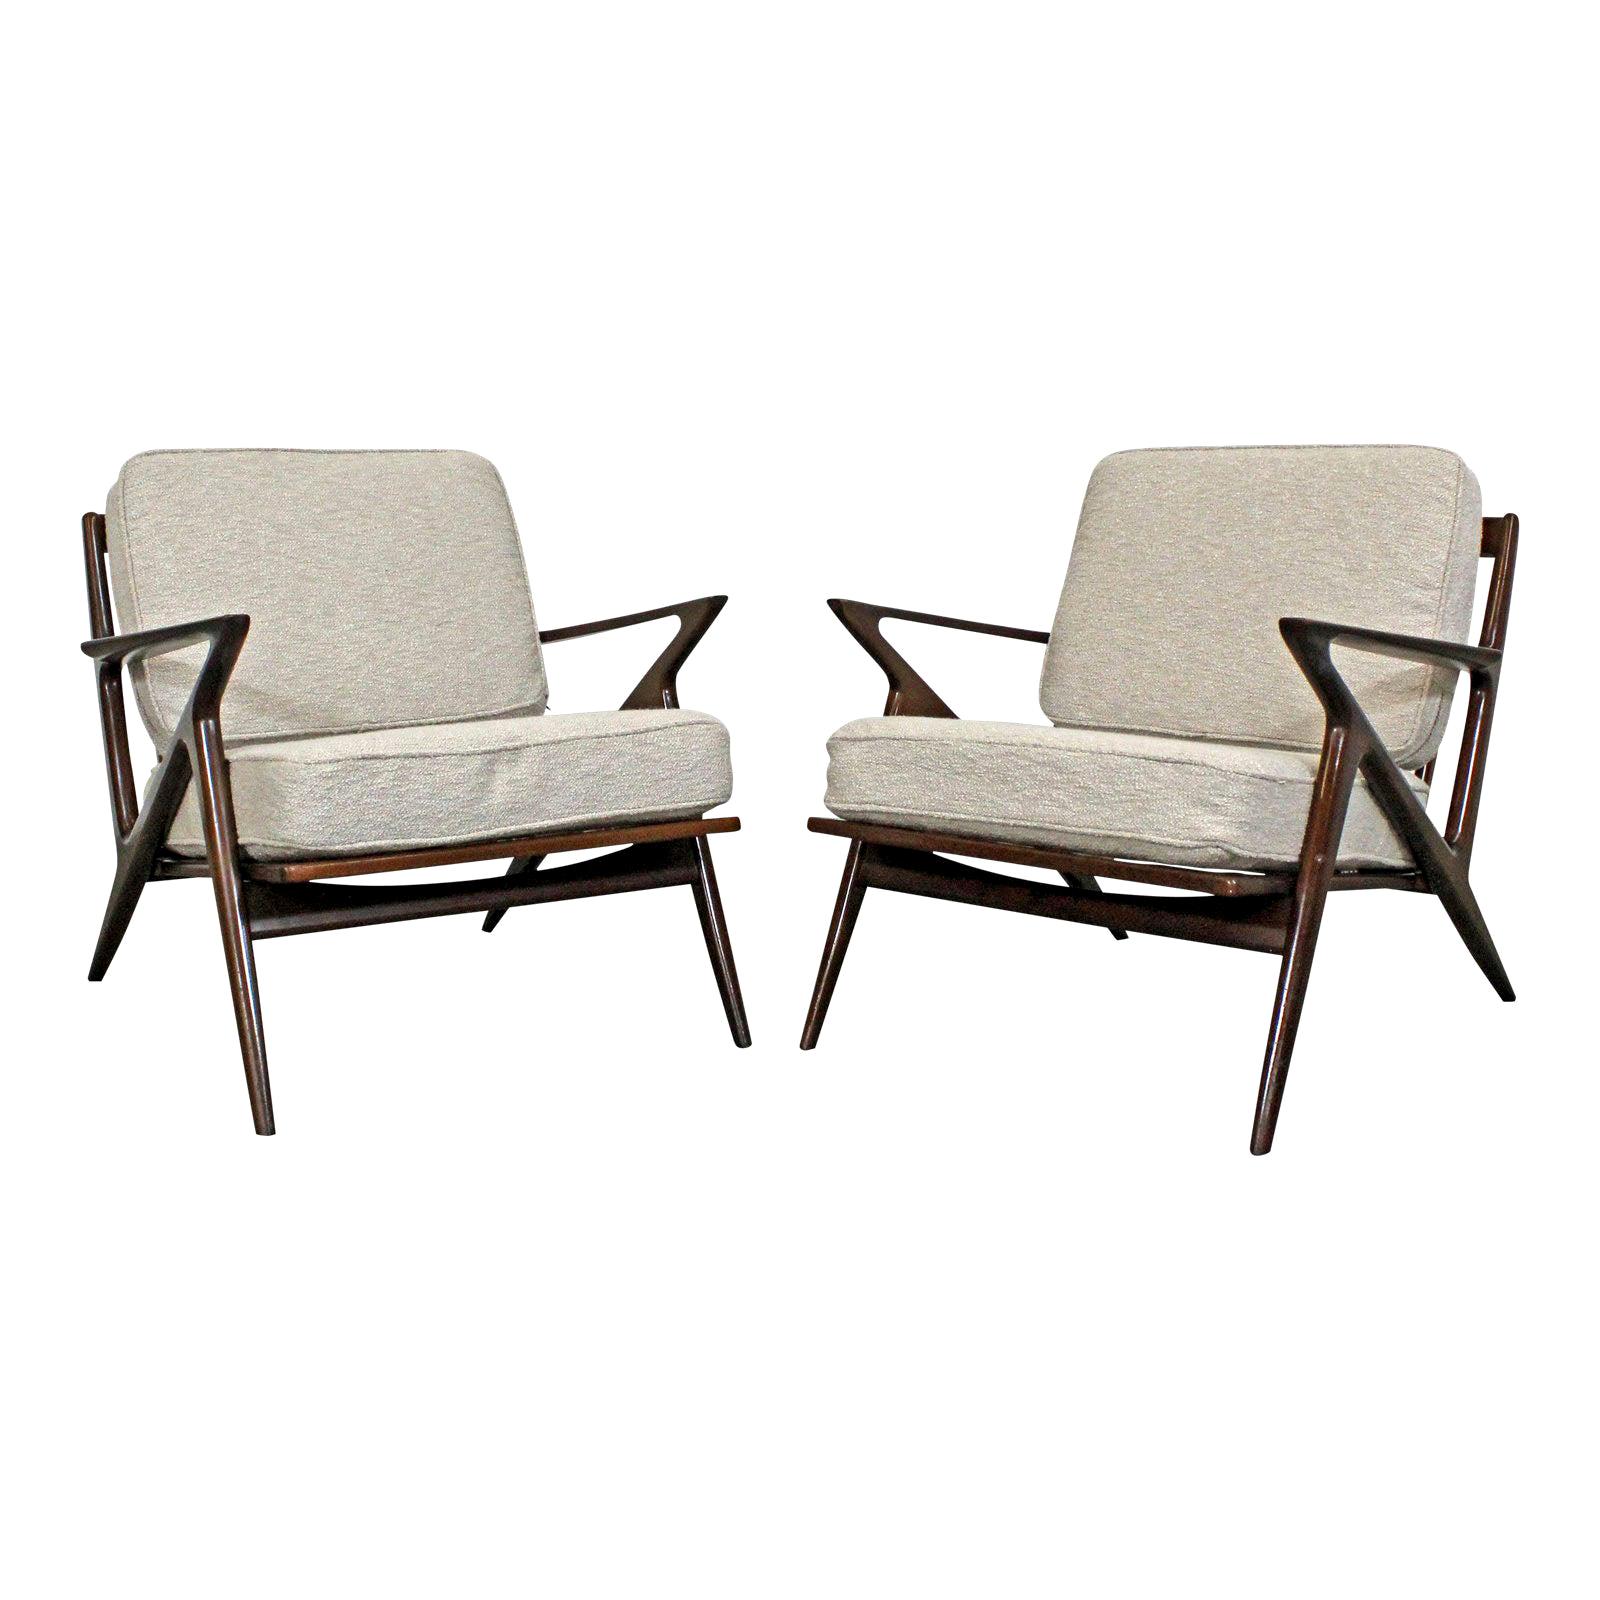 Pair of Midcentury Danish Modern Poul Jensen Selig Z Lounge Chairs